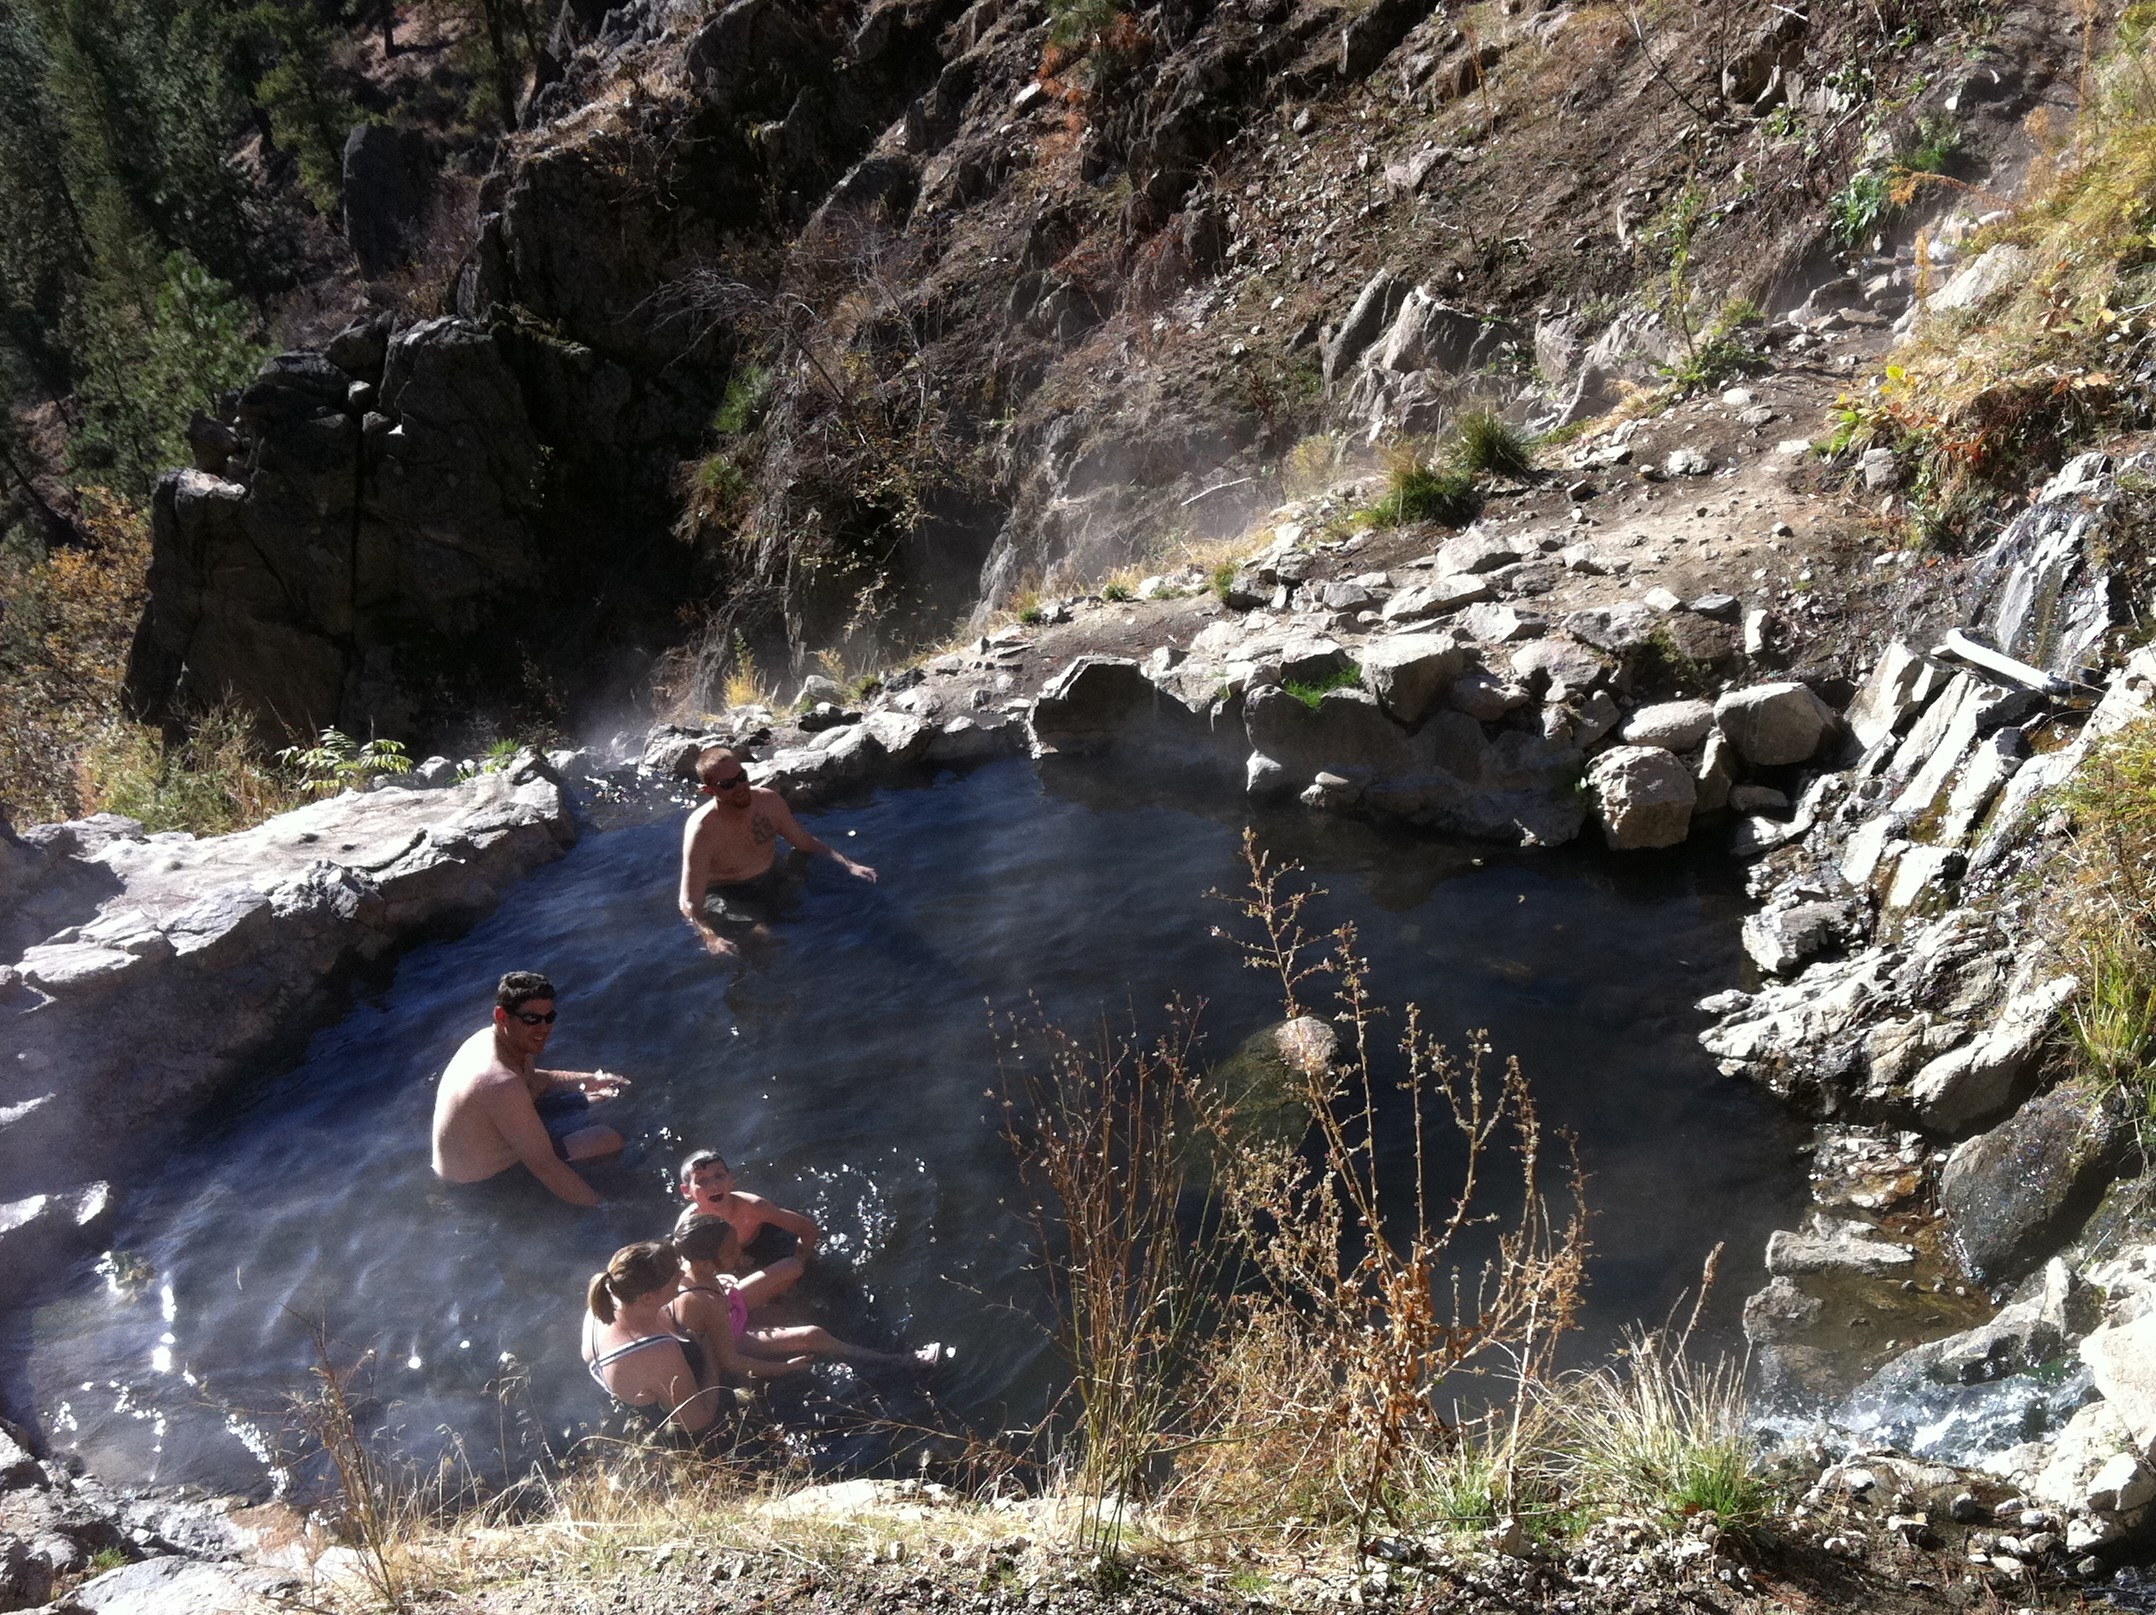 Idaho Skinny Dipper Hot Springs near Boise will not reopen